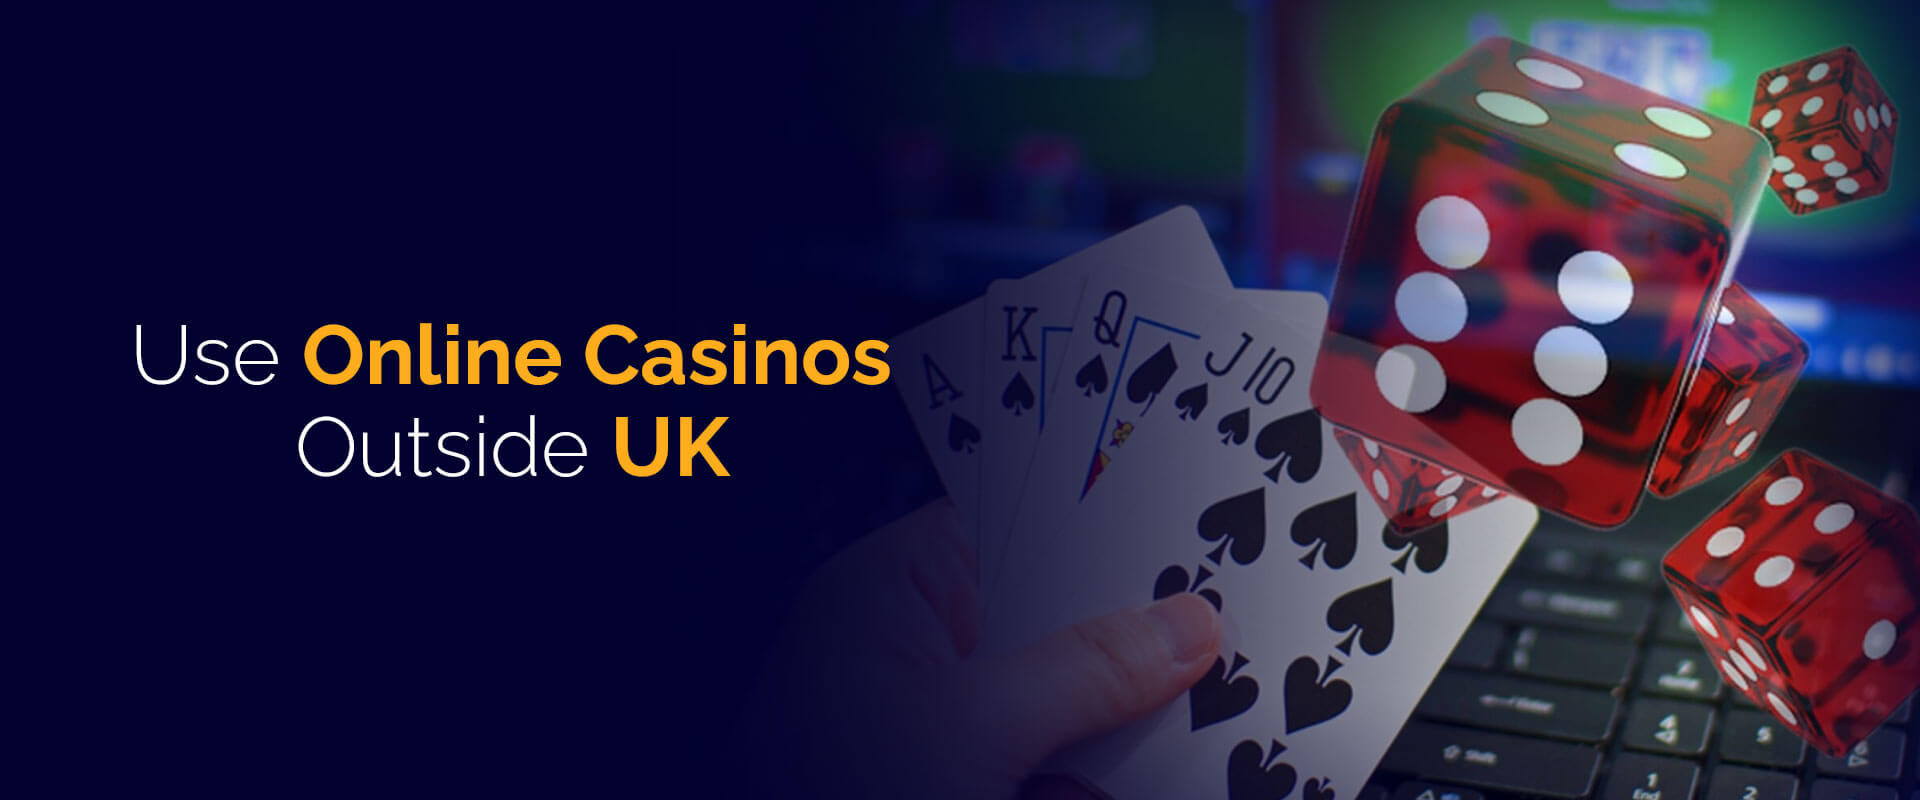 Use Online Casinos Outside UK